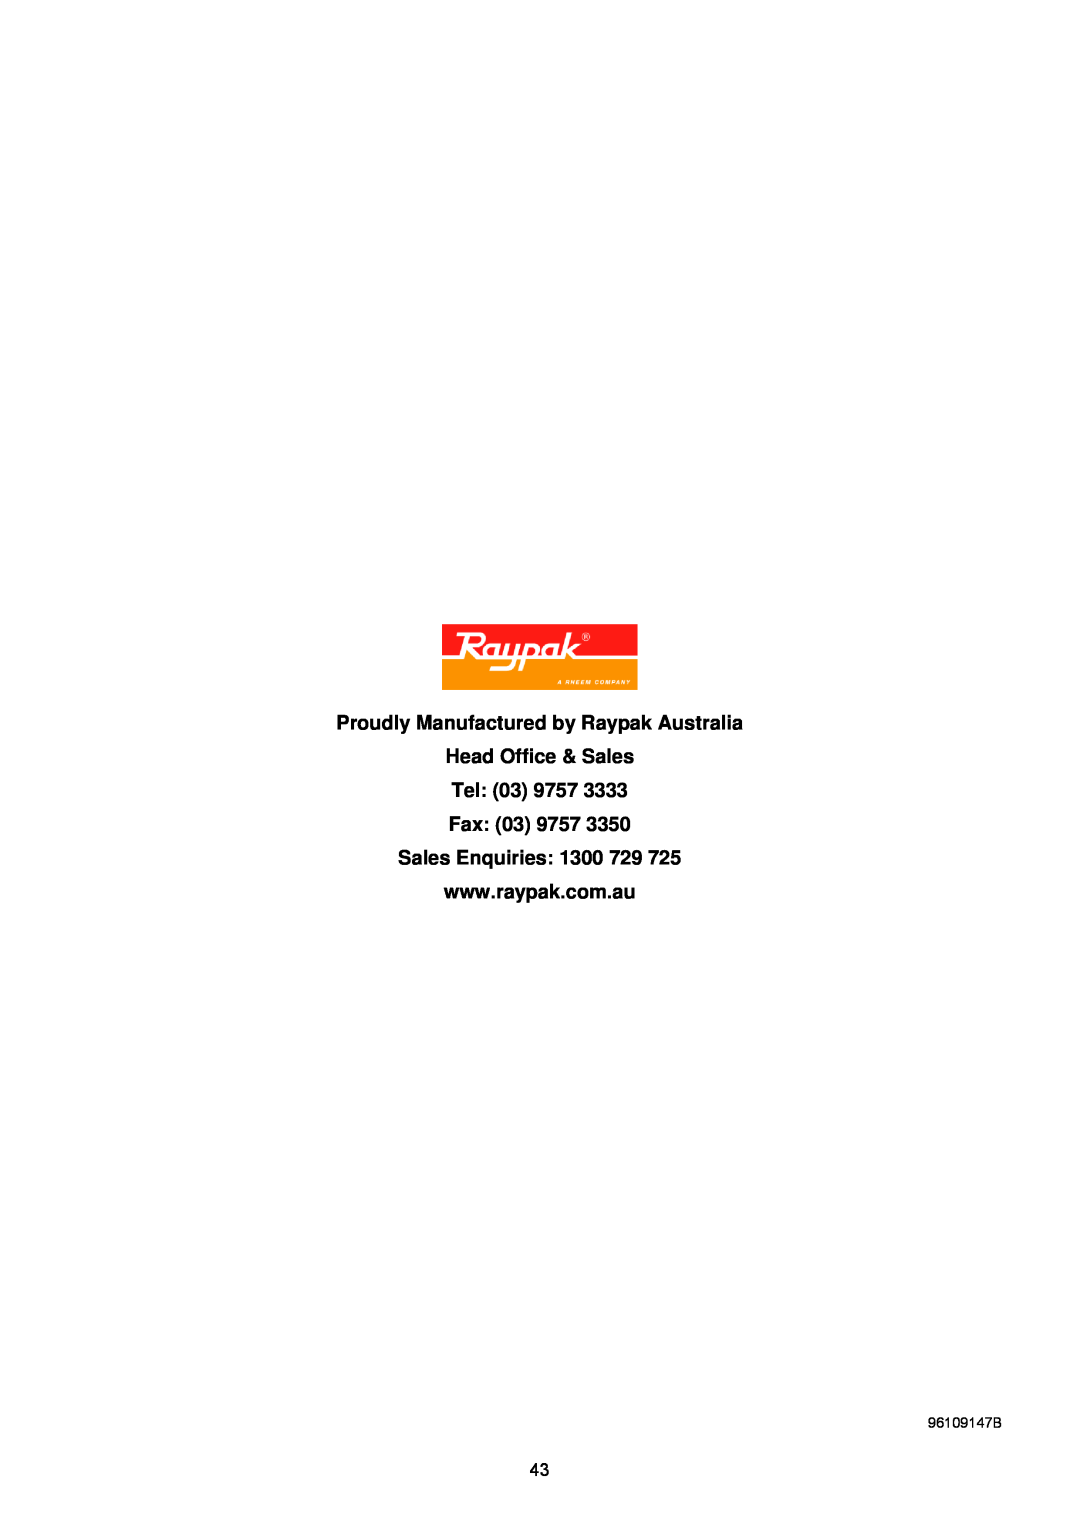 Raypak B0109, B0147 Proudly Manufactured by Raypak Australia, Head Office & Sales Tel 03 9757 Fax, 96109147B 